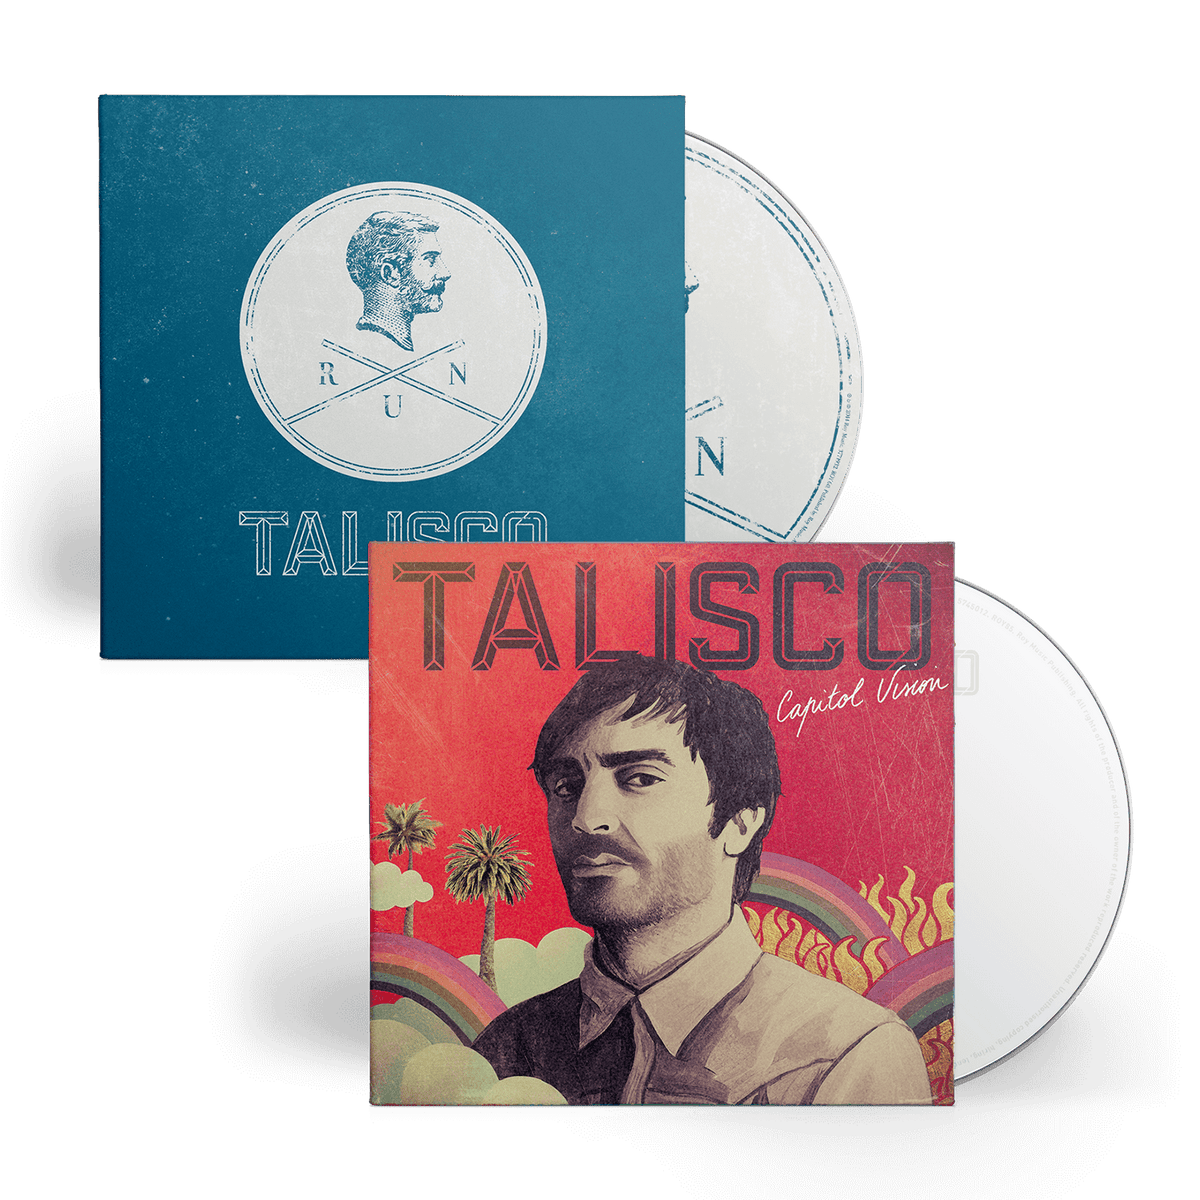 Talisco - Run + Capitol Vision - Coffret CD Digipack